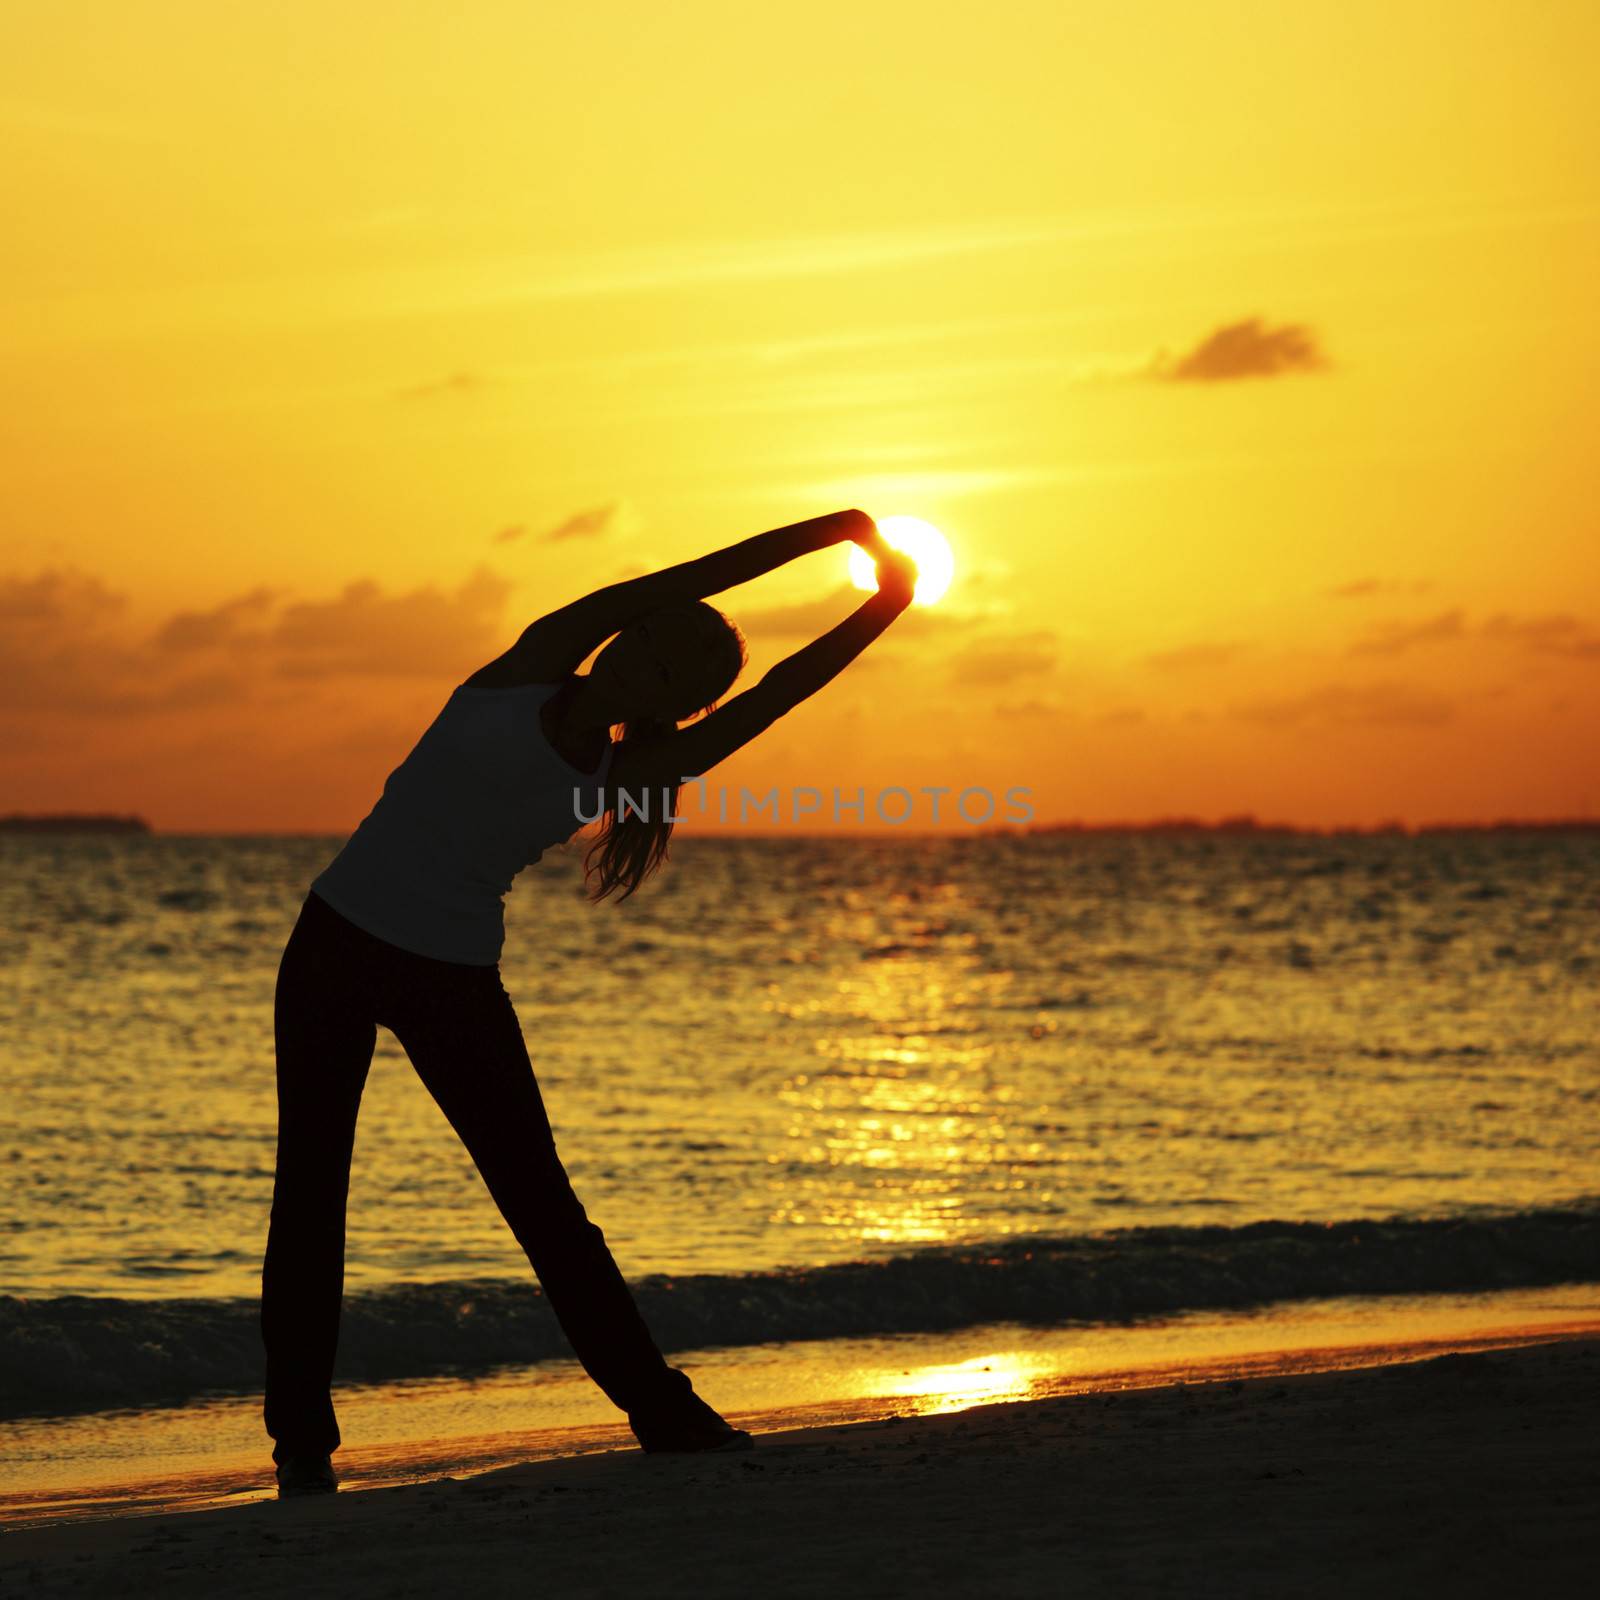 Woman stretching on sunset beach by Yellowj